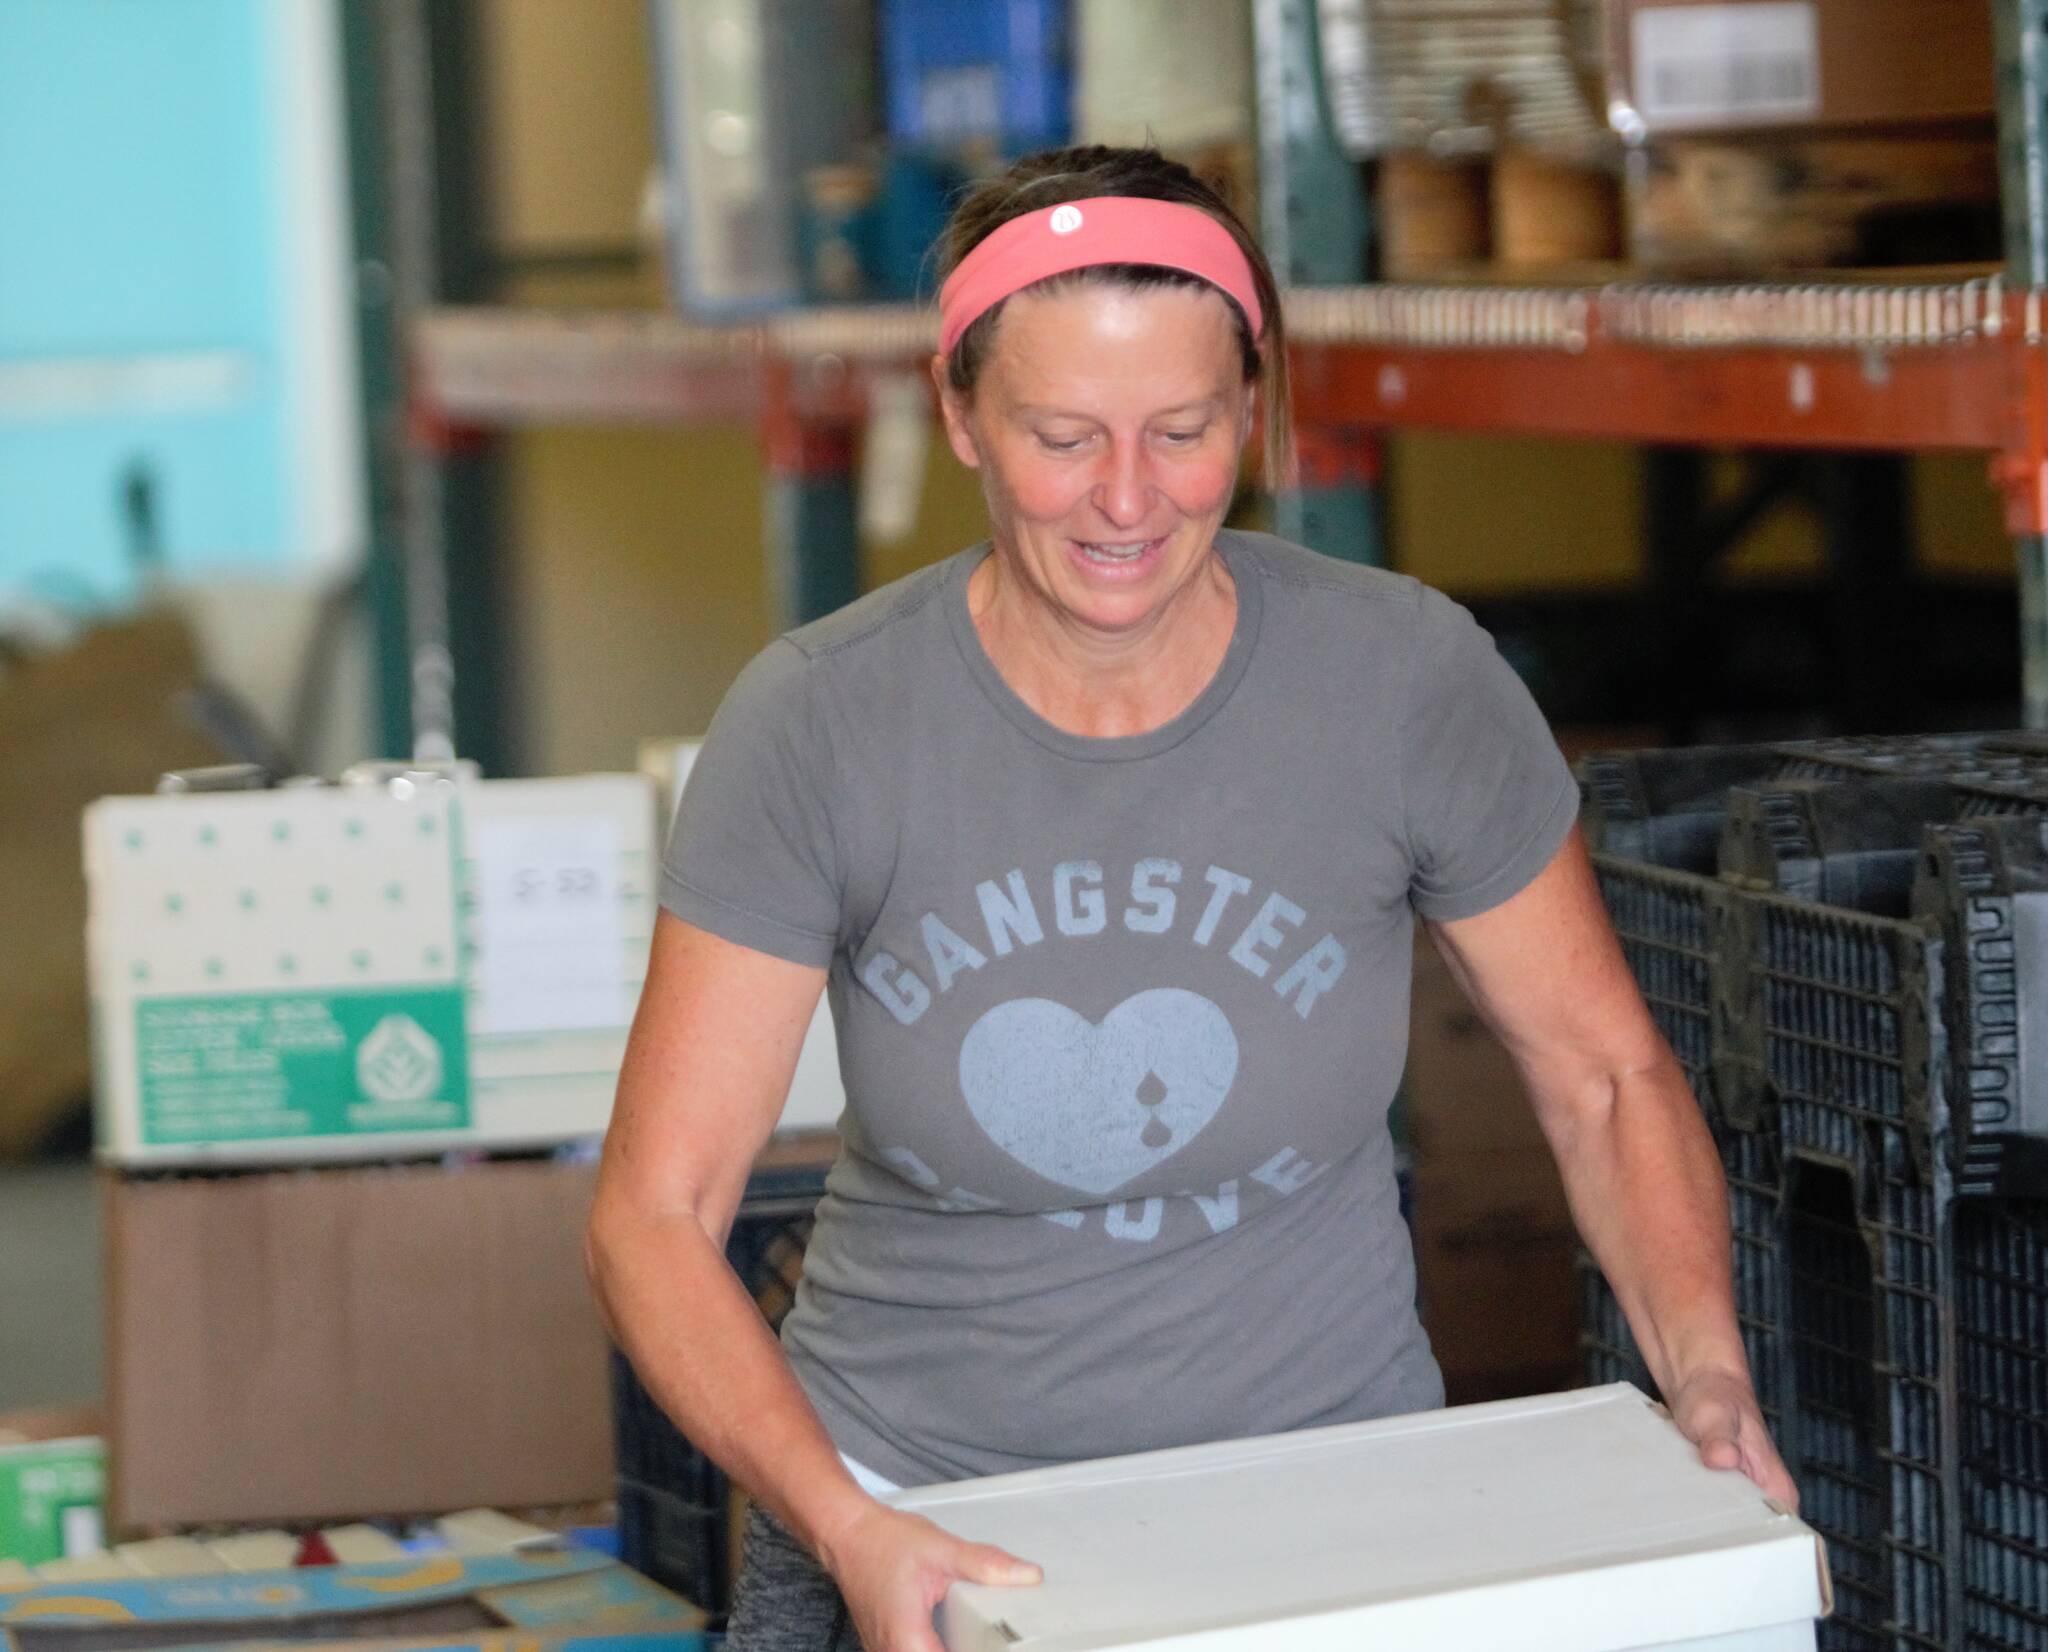 Elisha Meyer/Kitsap News Group
Cori Kauk moves around some boxes during a major clean-up.